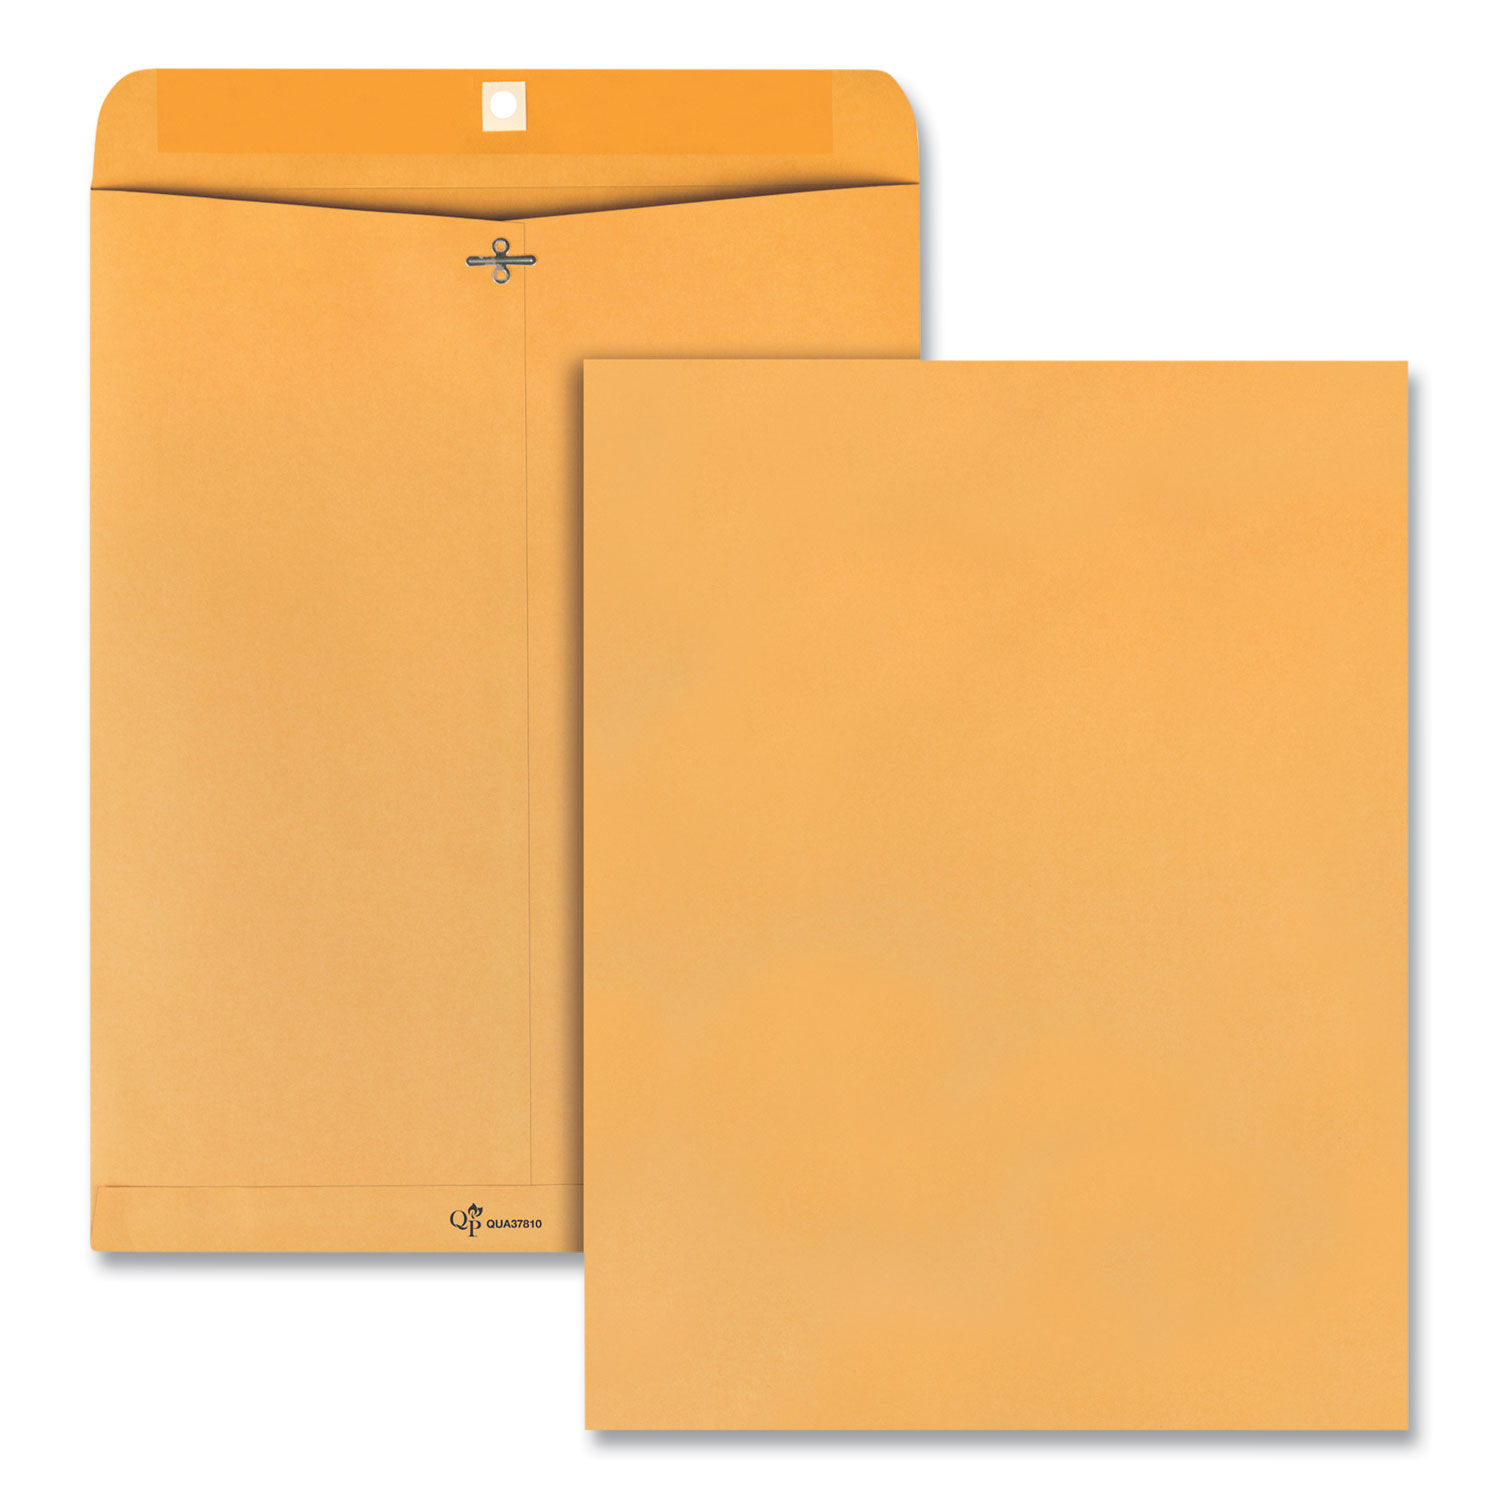 Clasp Envelope 32 lb Bond Weight Kraft, #15 1/2, Square Flap, Clasp/Gummed Closure, 12 x 15.5, Brown Kraft, 100/Box